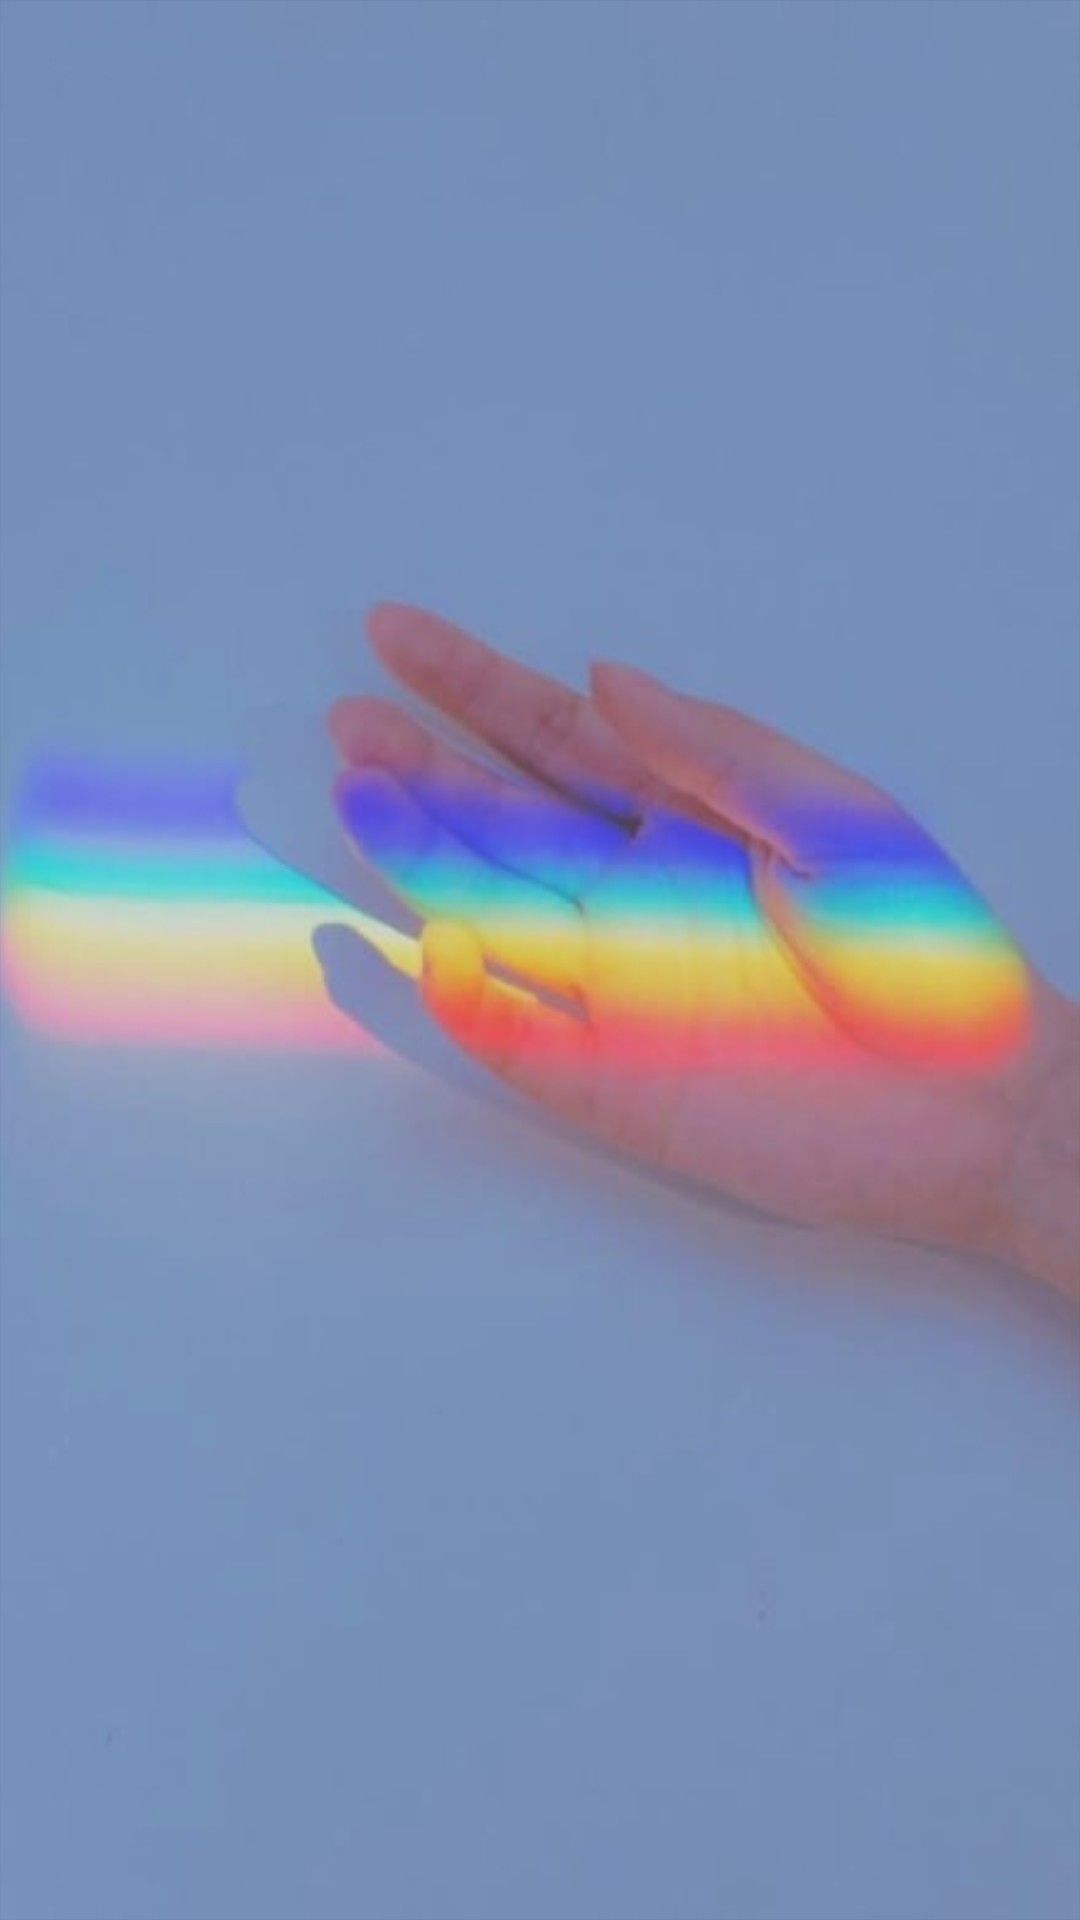 A hand holding up an image of rainbow light - Rainbows